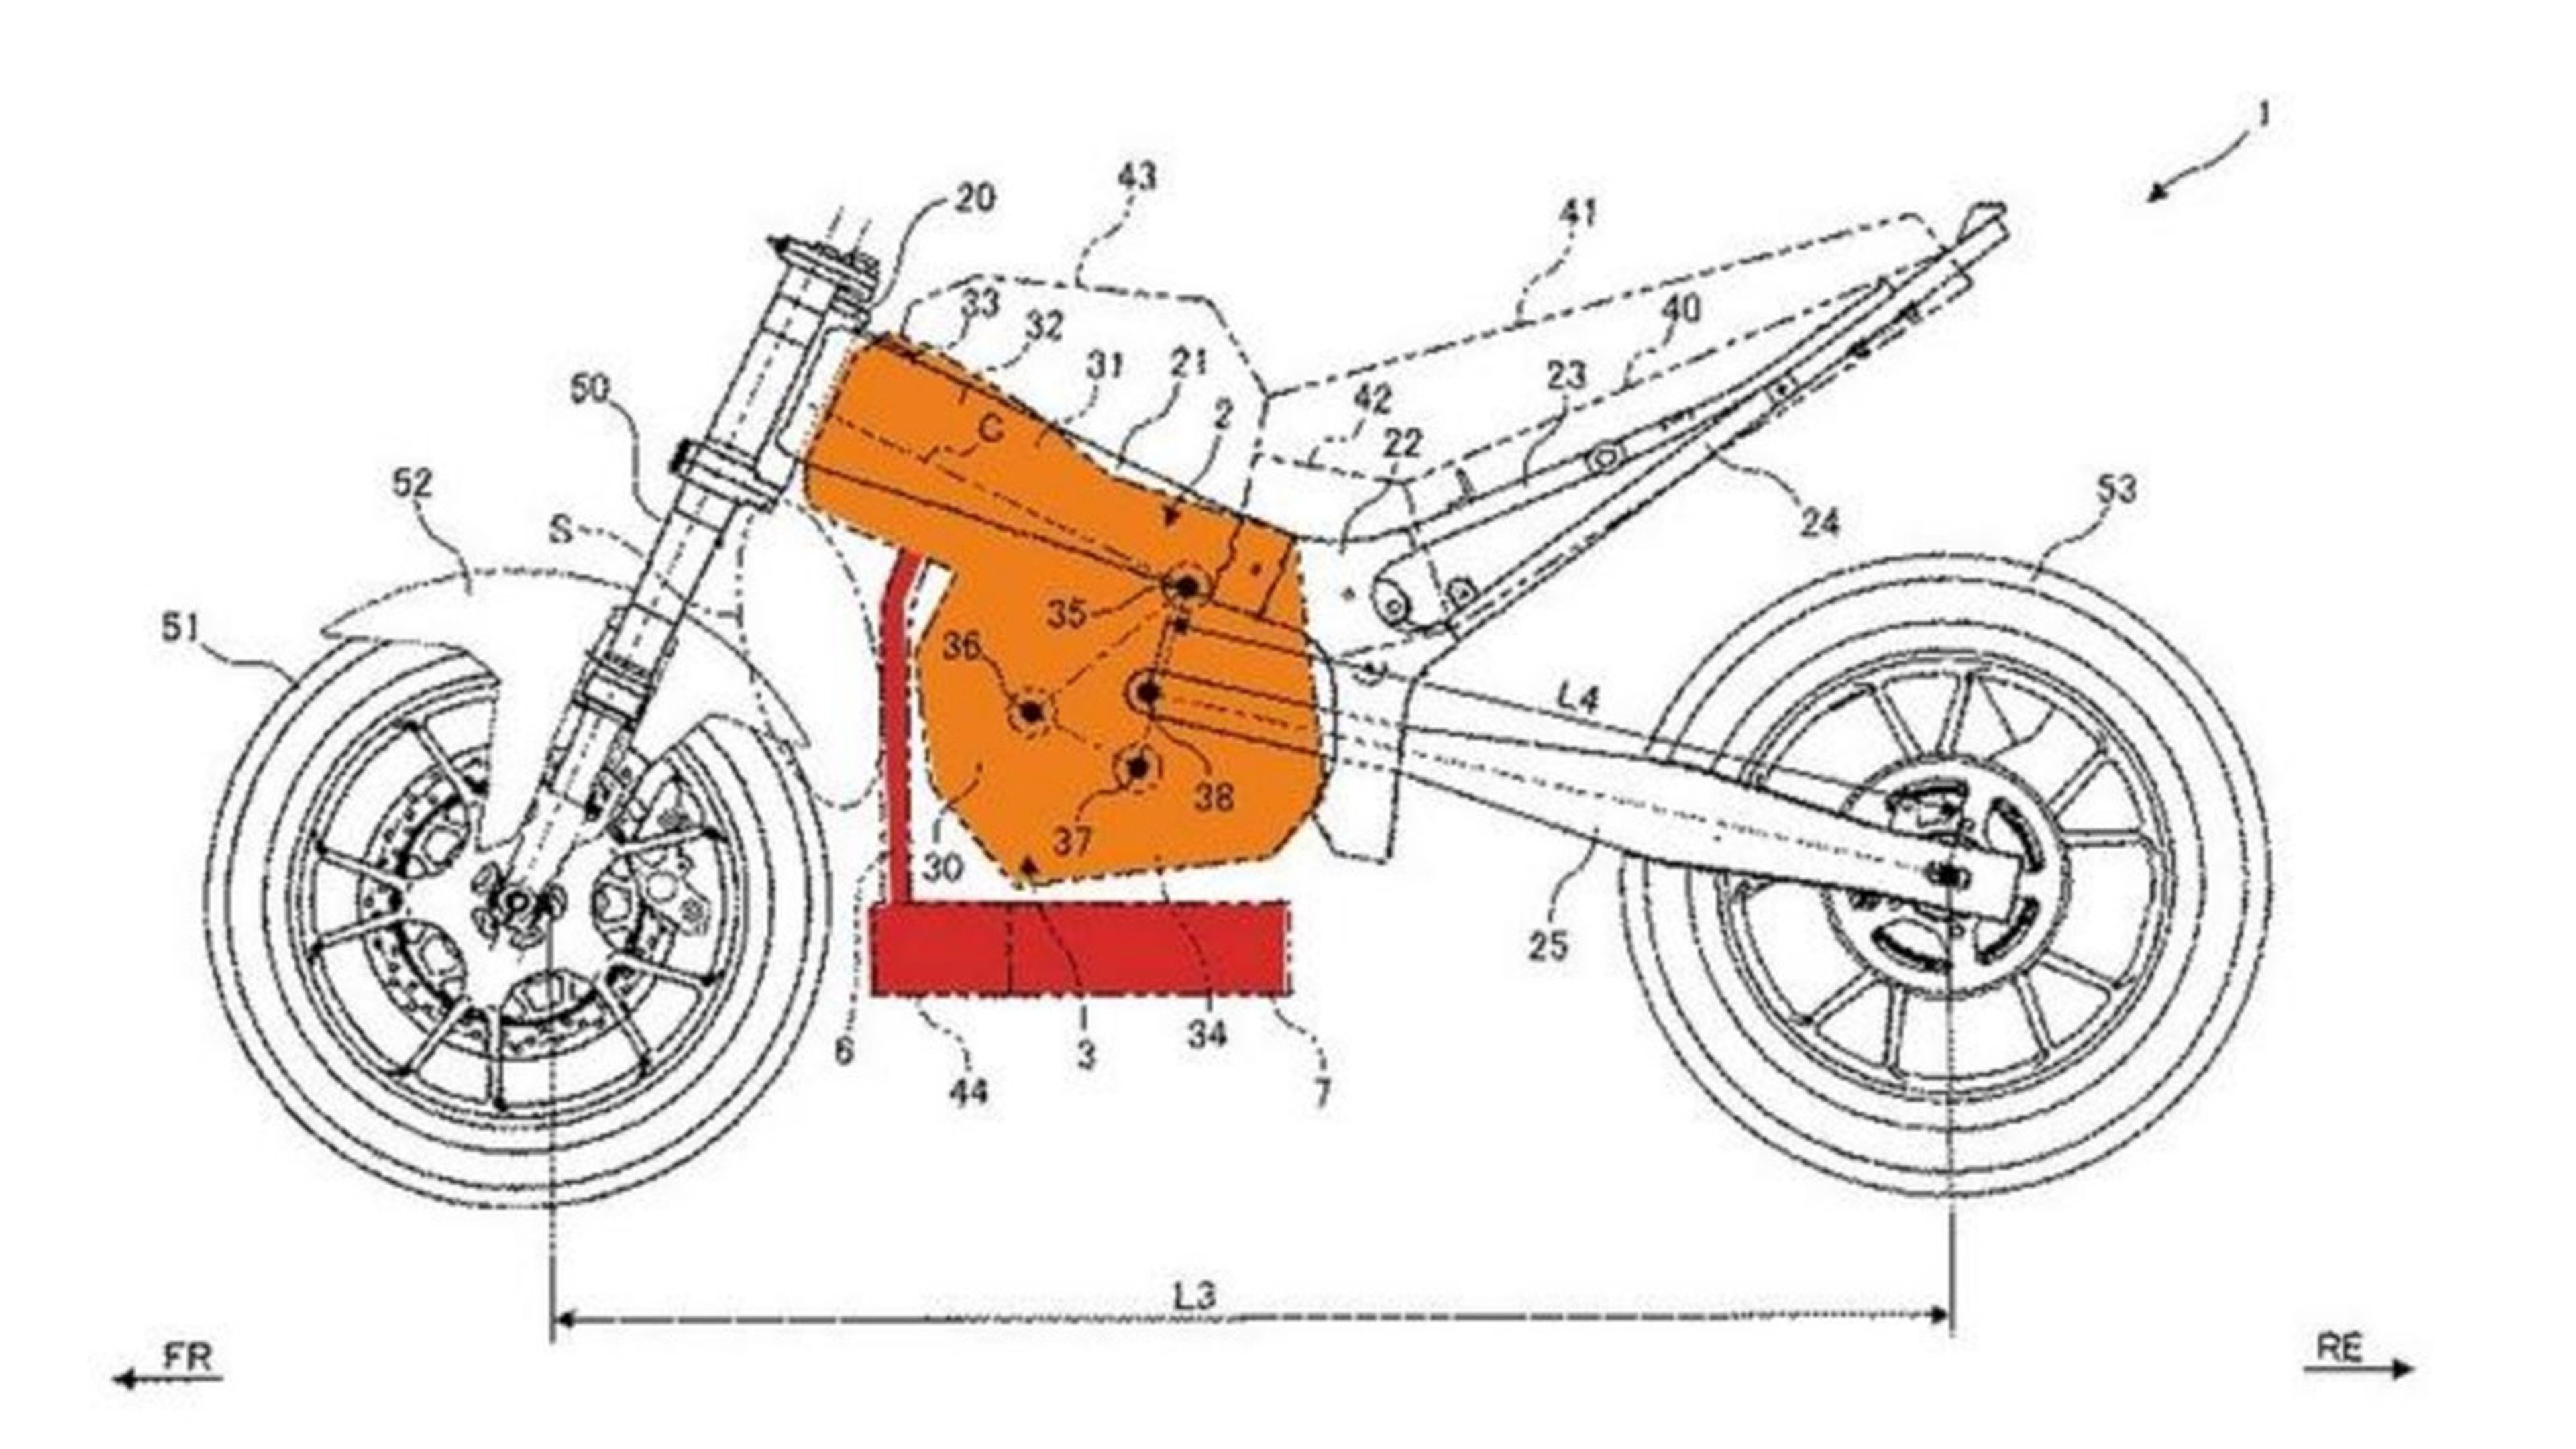 Suzuki motor invertido de moto